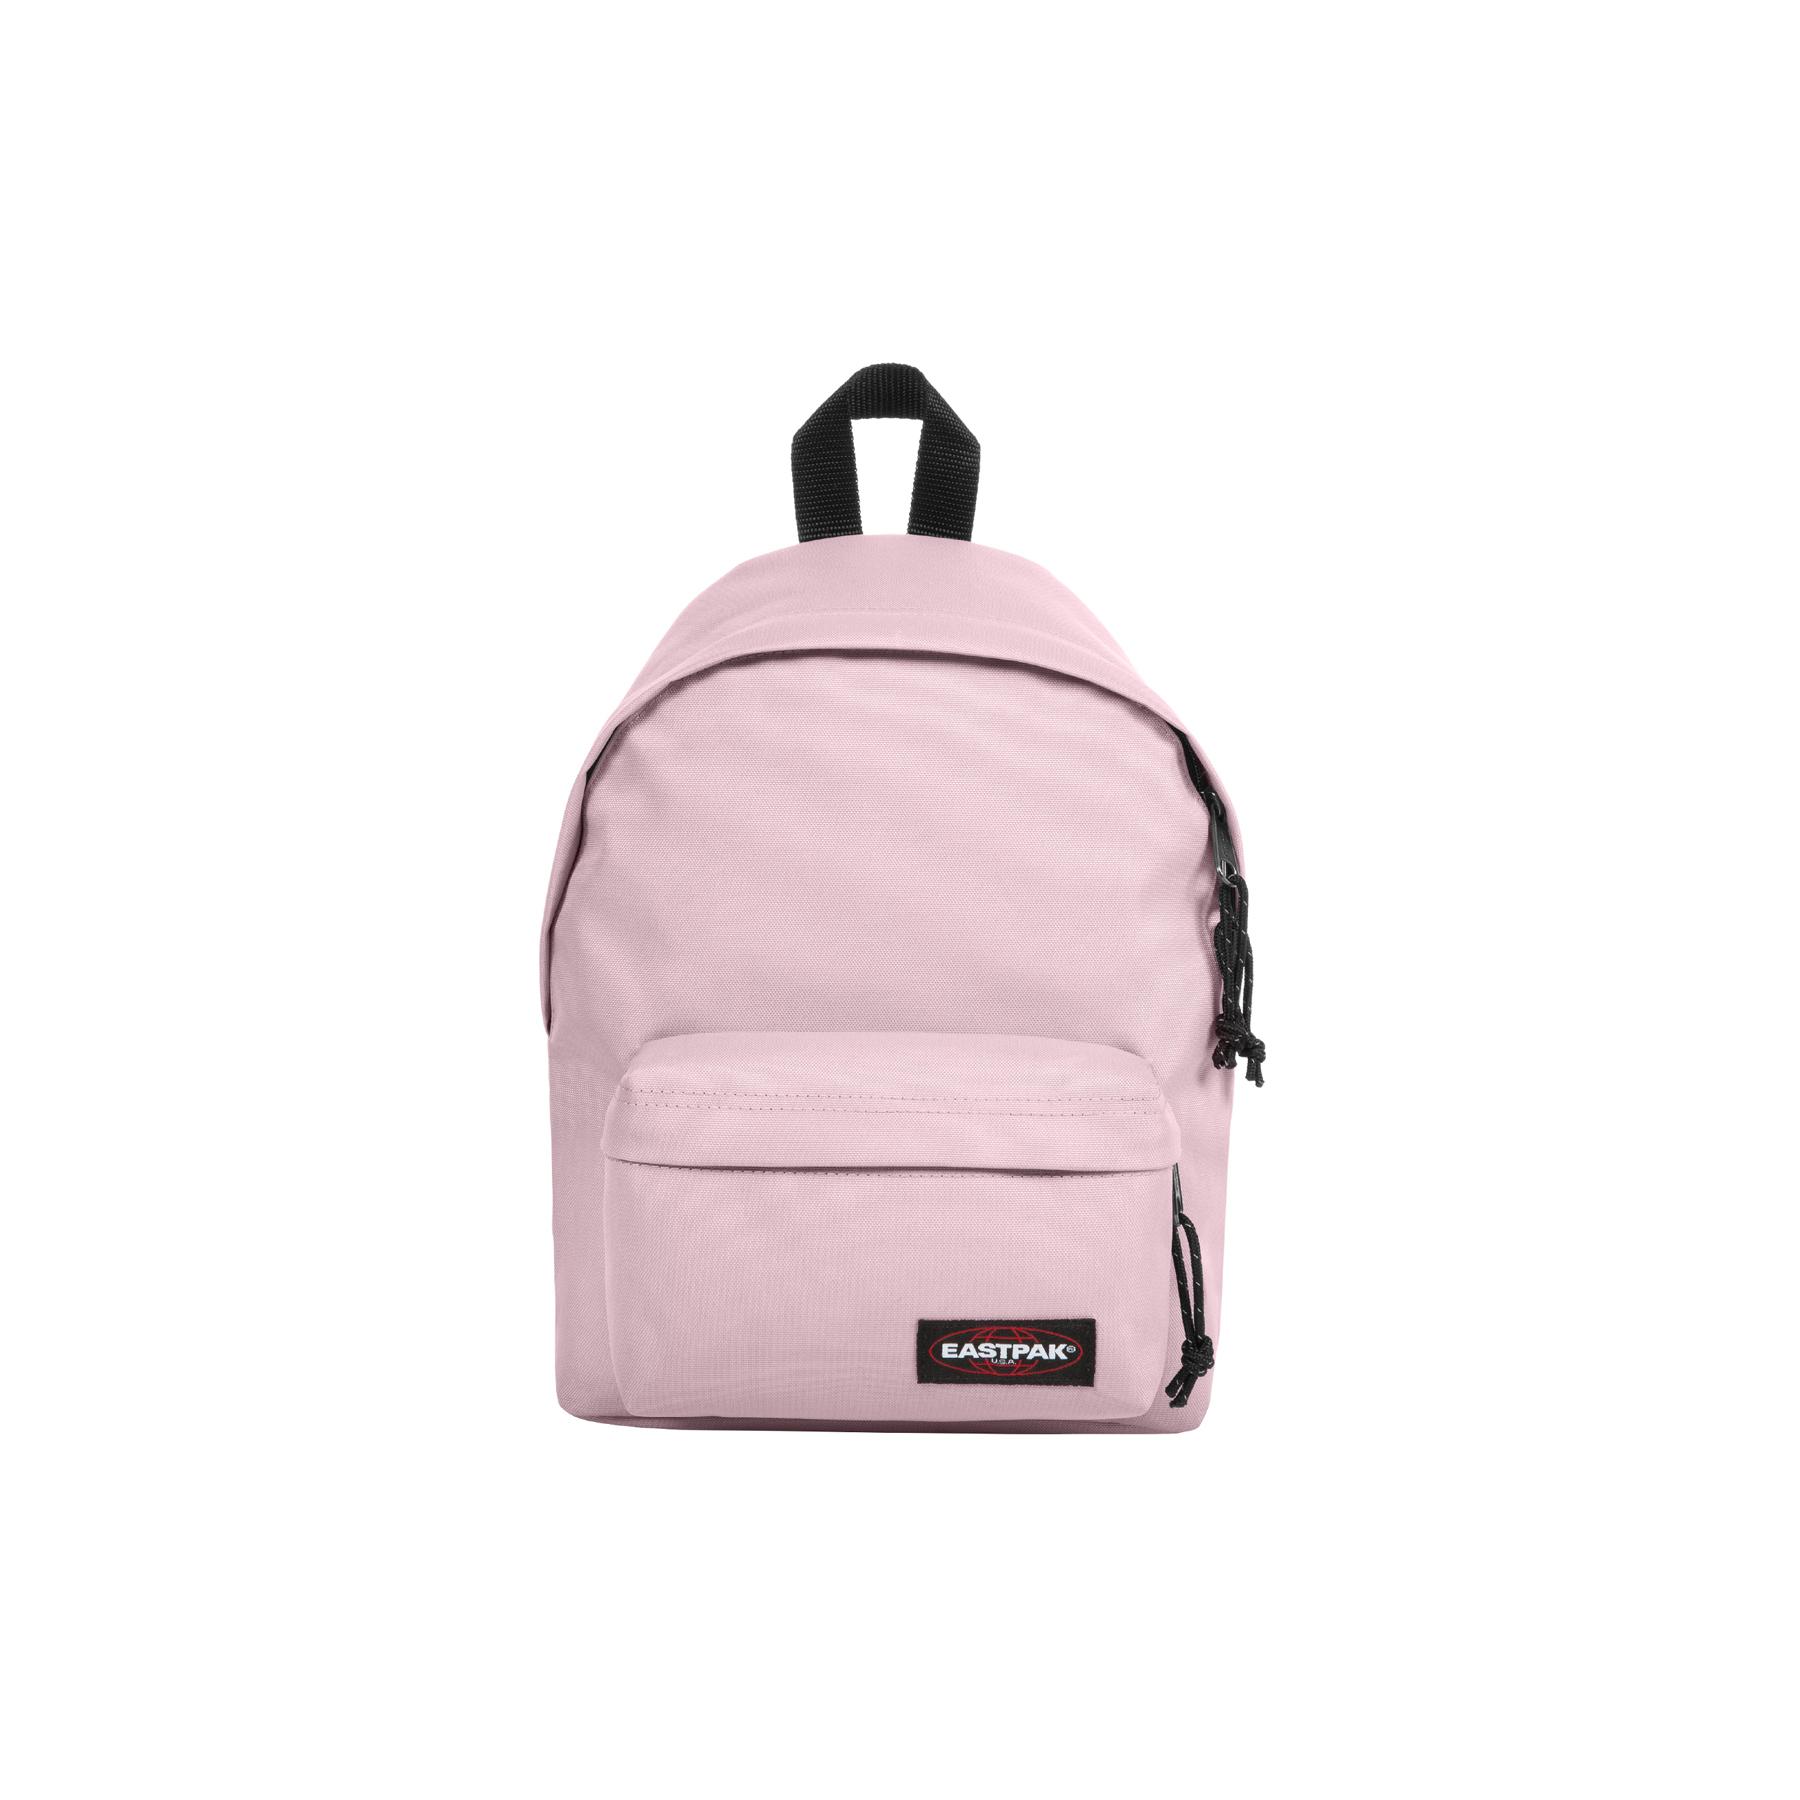 Eastpak Orbit Mini Backpack in Pink | Lyst